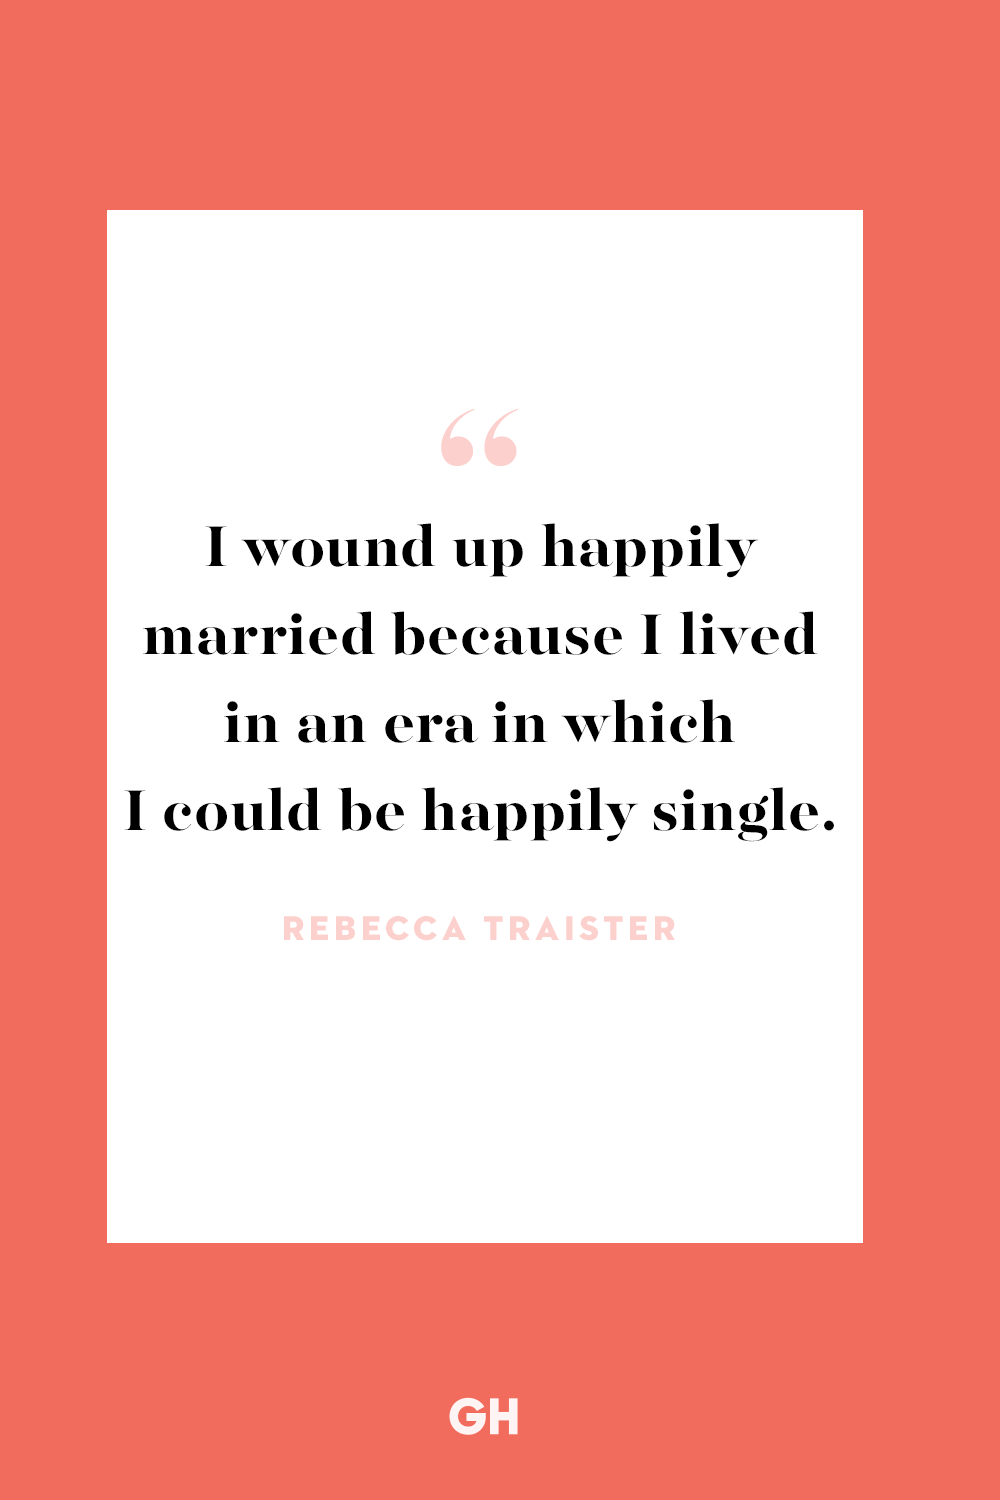 sad marriage quotes